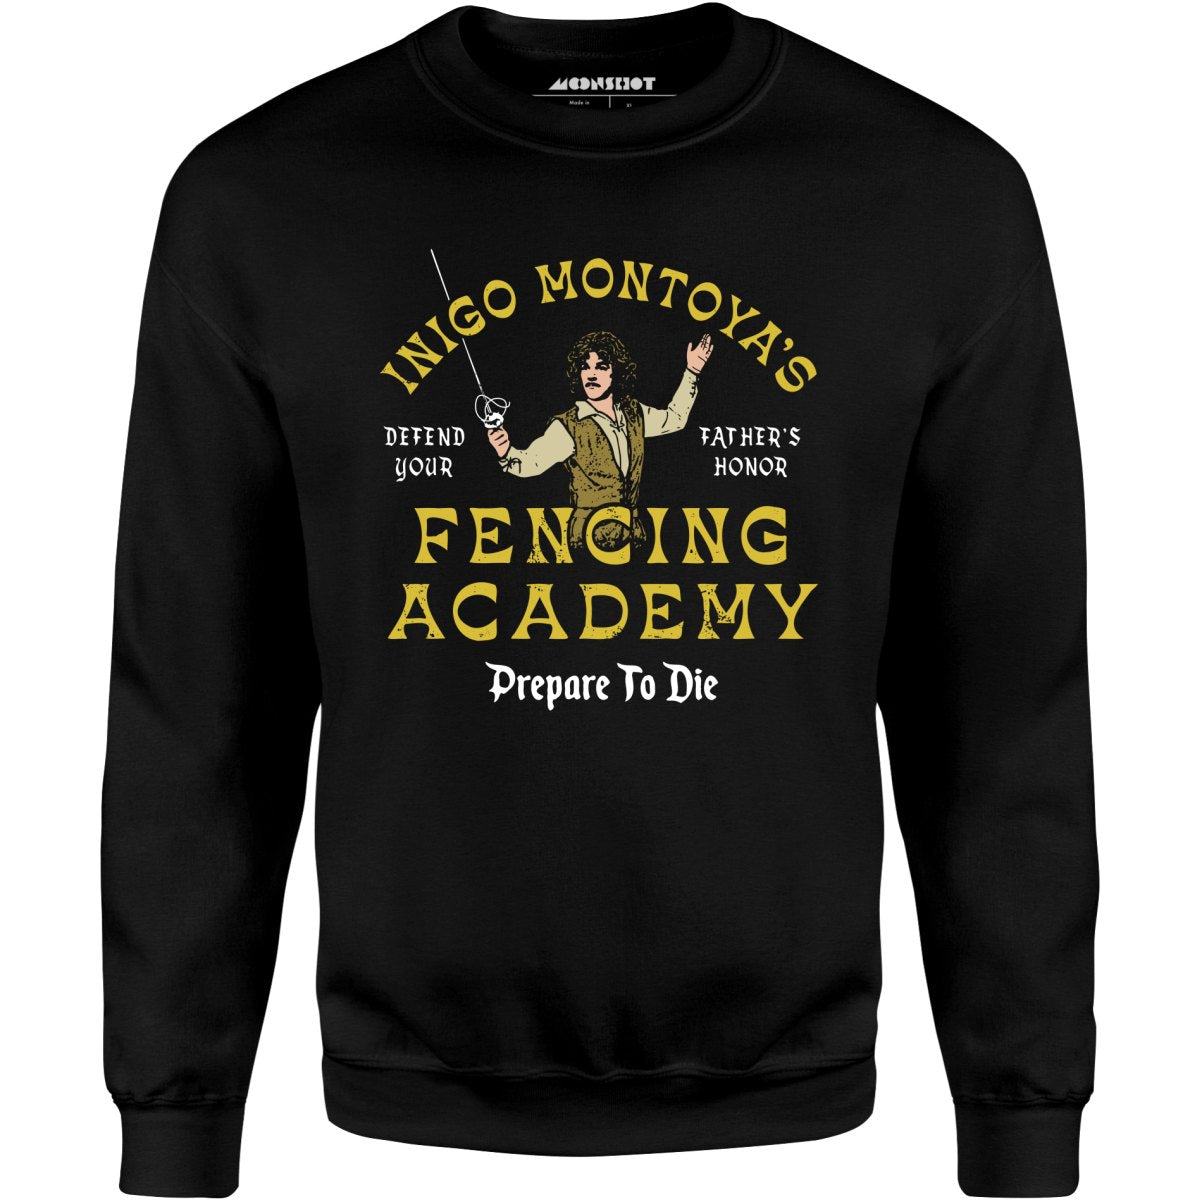 Inigo Montoya's Fencing Academy - Unisex Sweatshirt